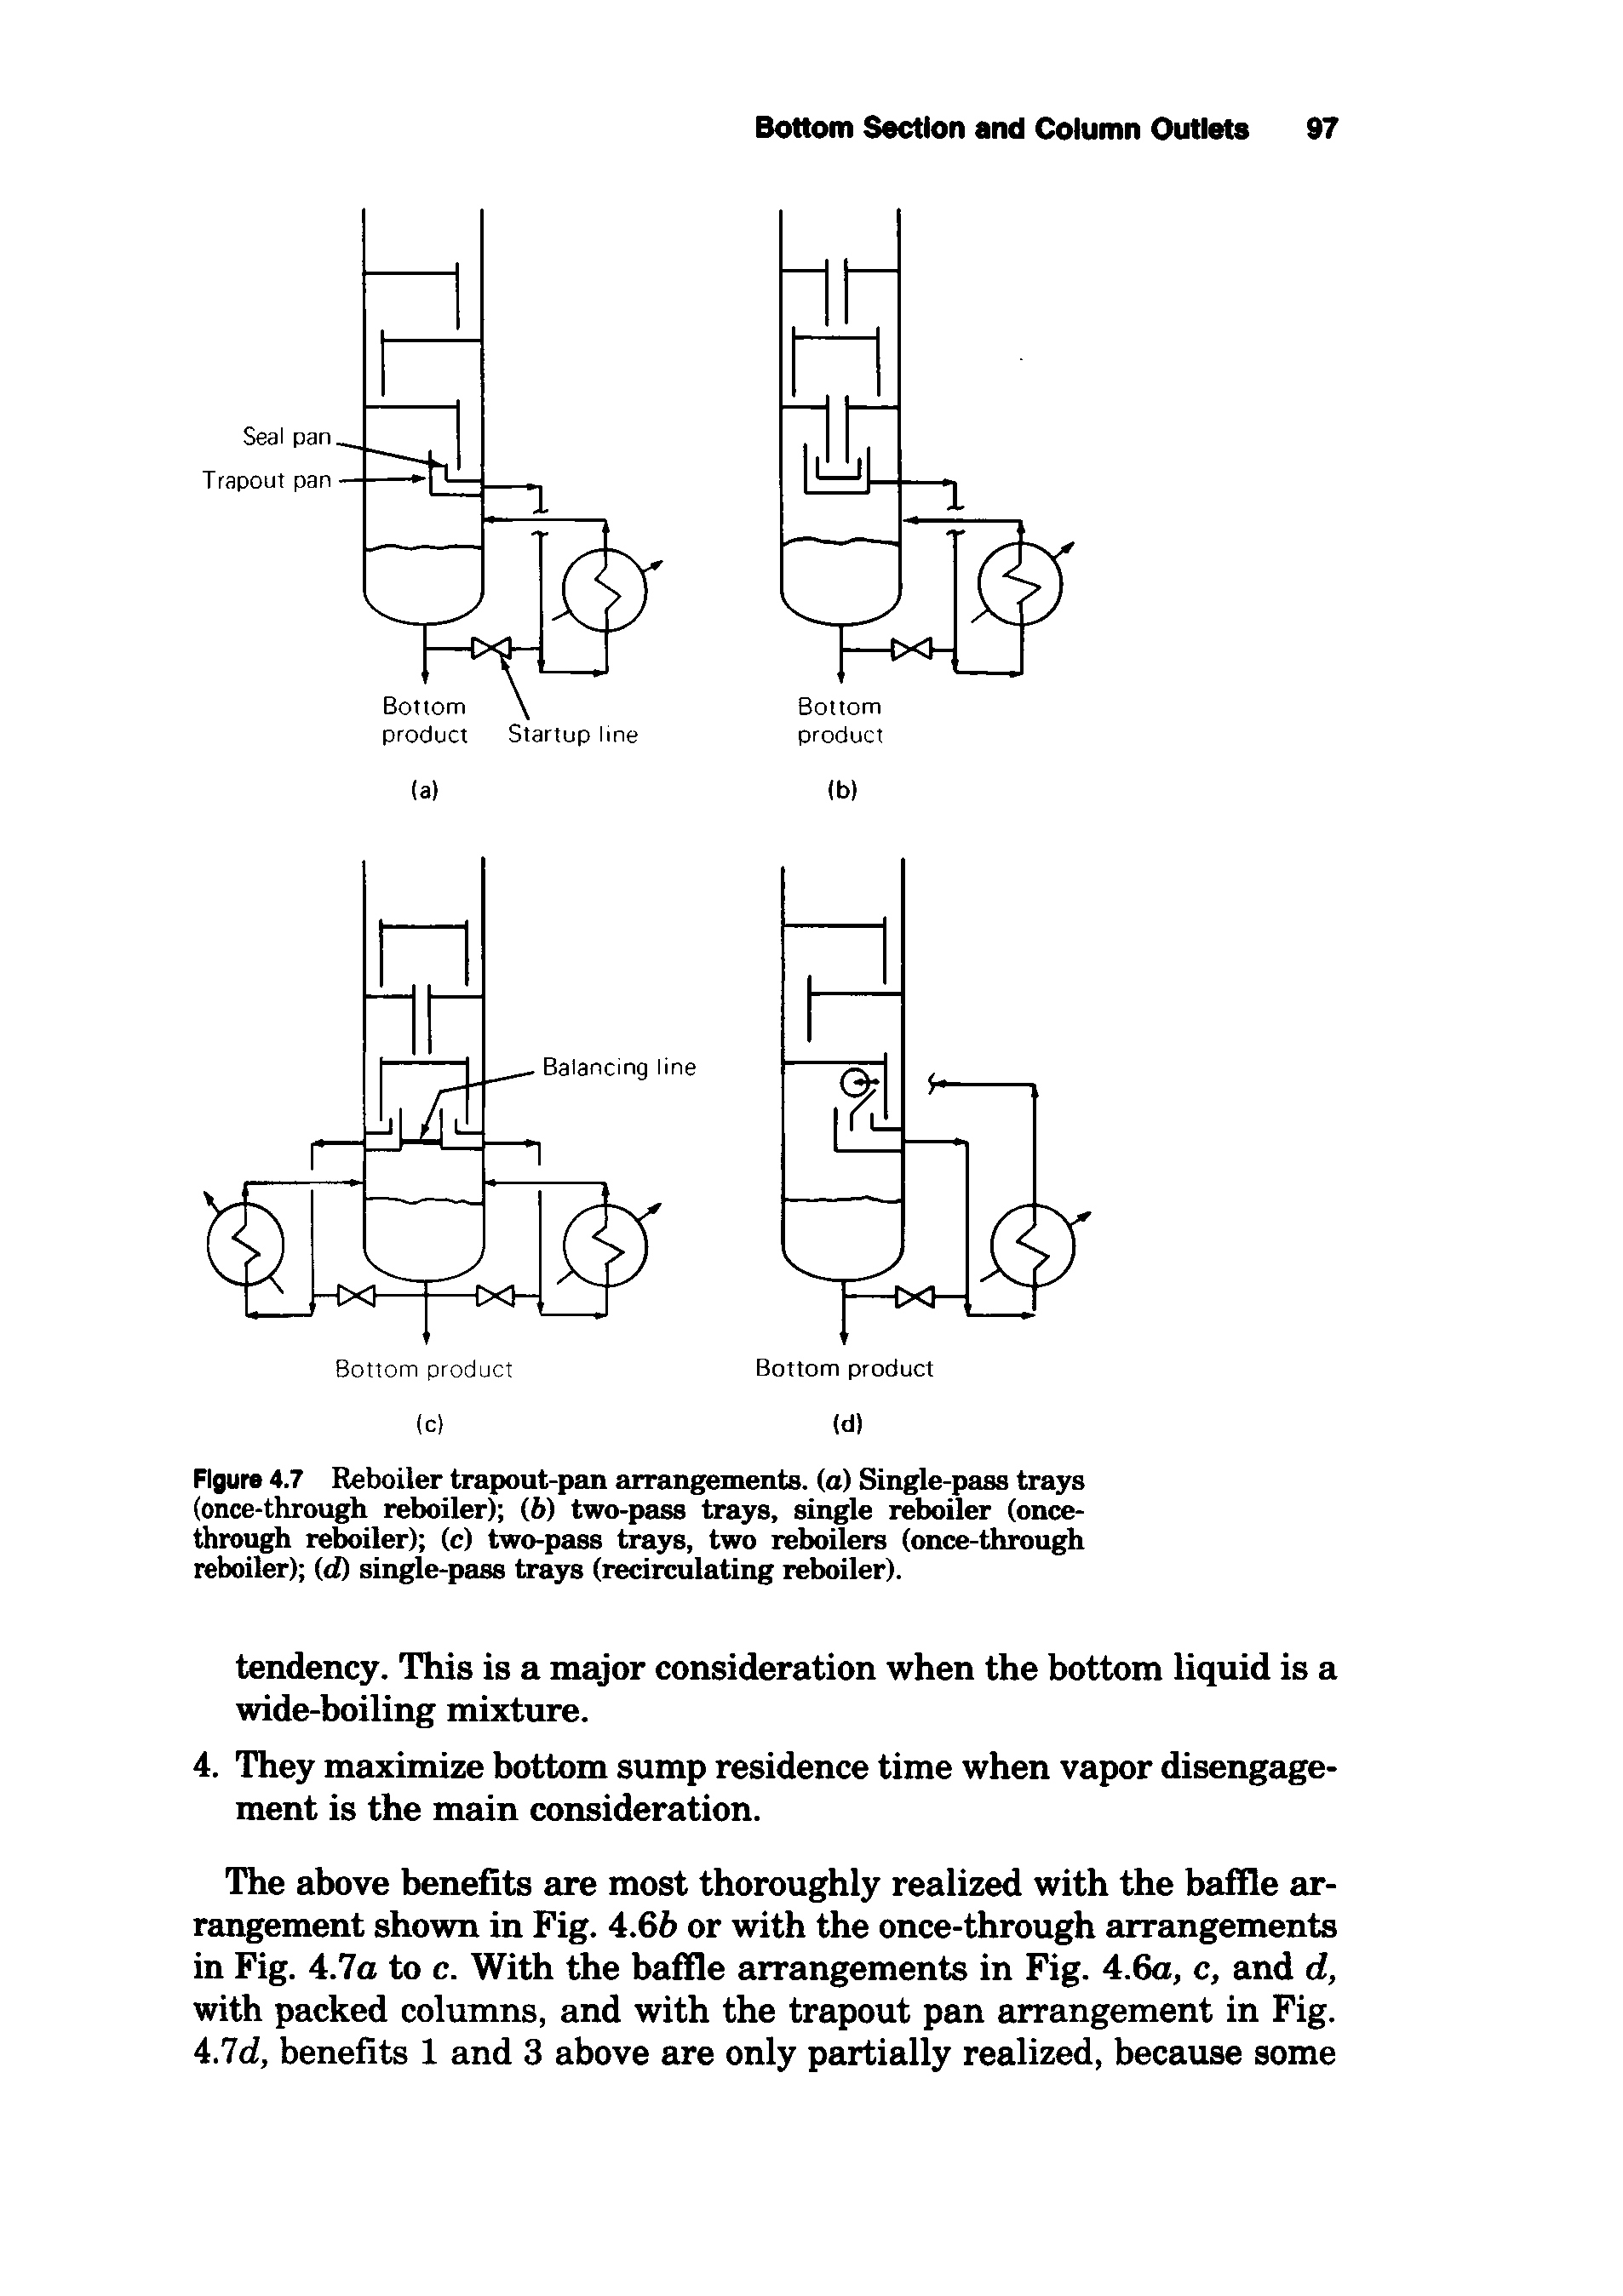 Figure 4.7 Reboiler trapout-pan arrangements, (a) Single-pass trays (once-through reboiler) (6) two-peiss trays, single reboiler (once-through reboiler) (c) two-pass trays, two reboilers (once-through reboiler) (d) single-pass trays (recirculating reboiler).